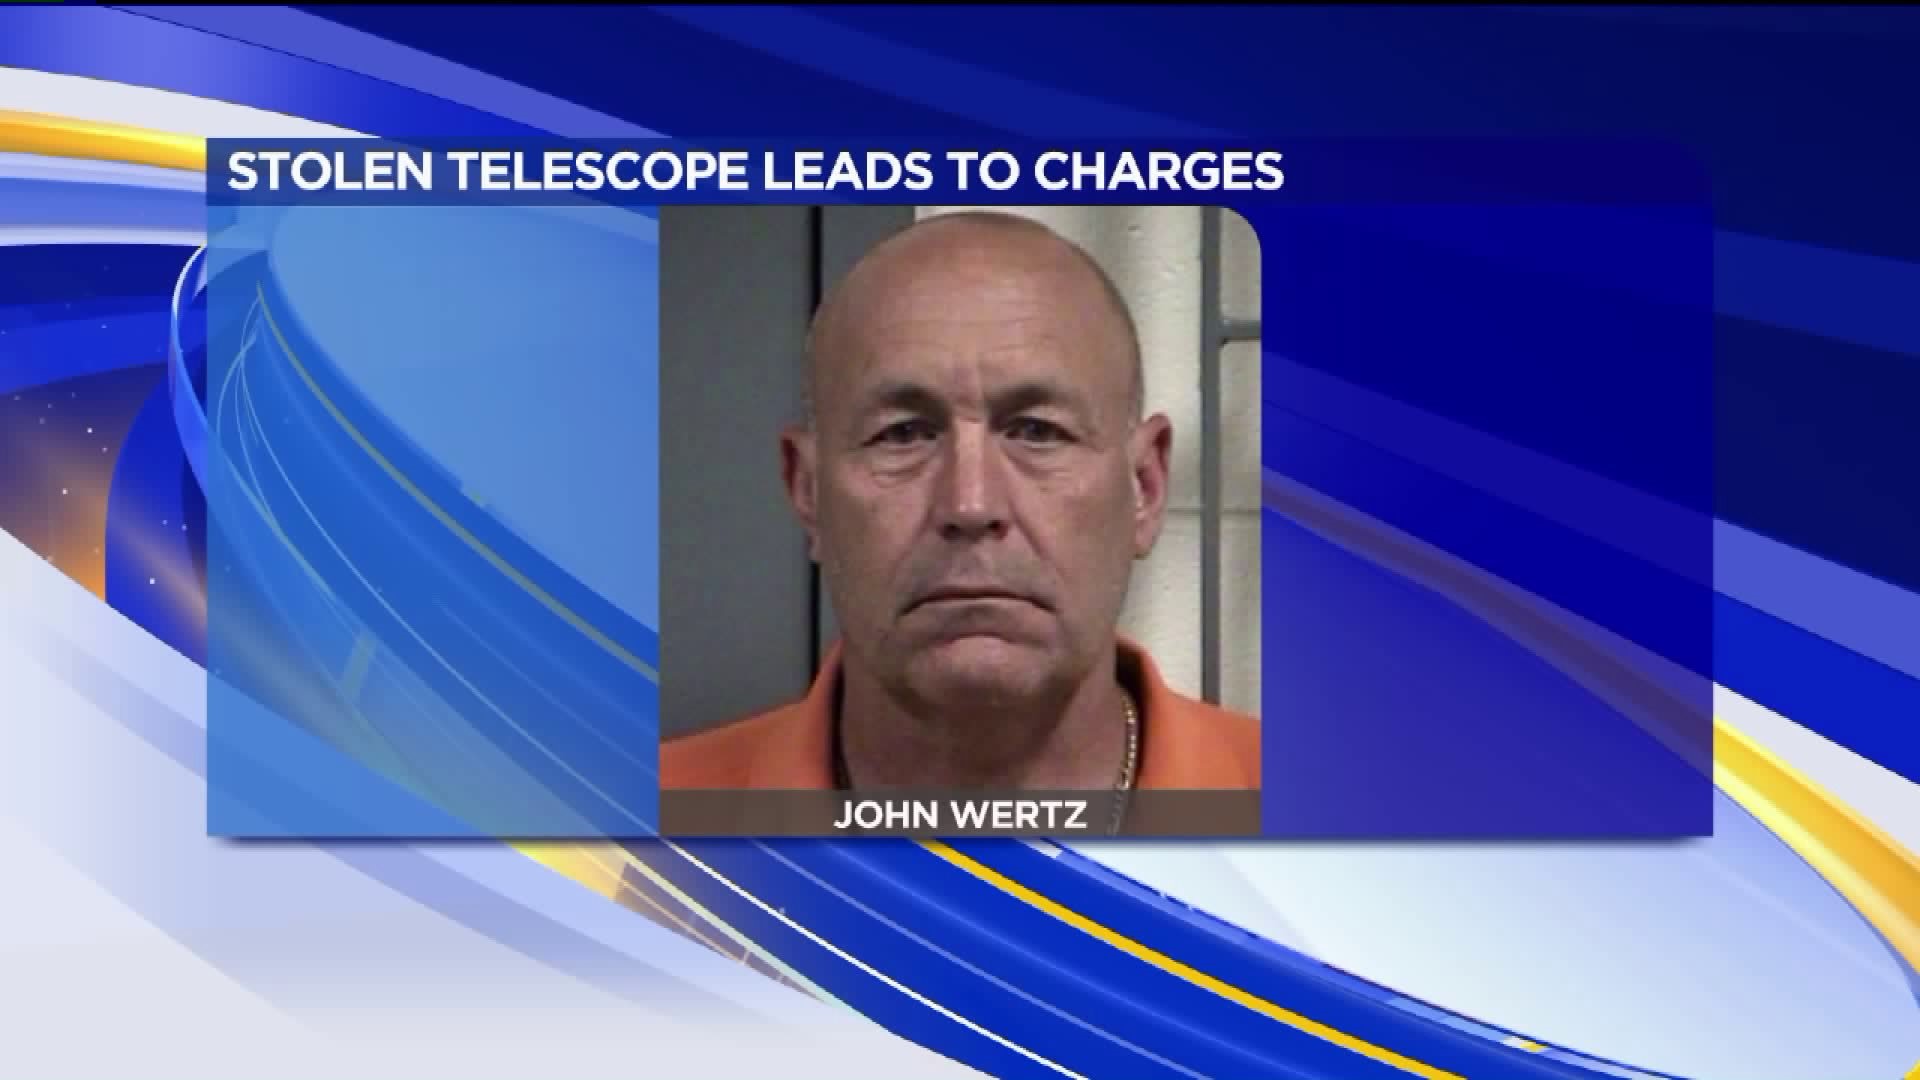 Police: Man Threatened to Kill Neighbors over Missing Telescope